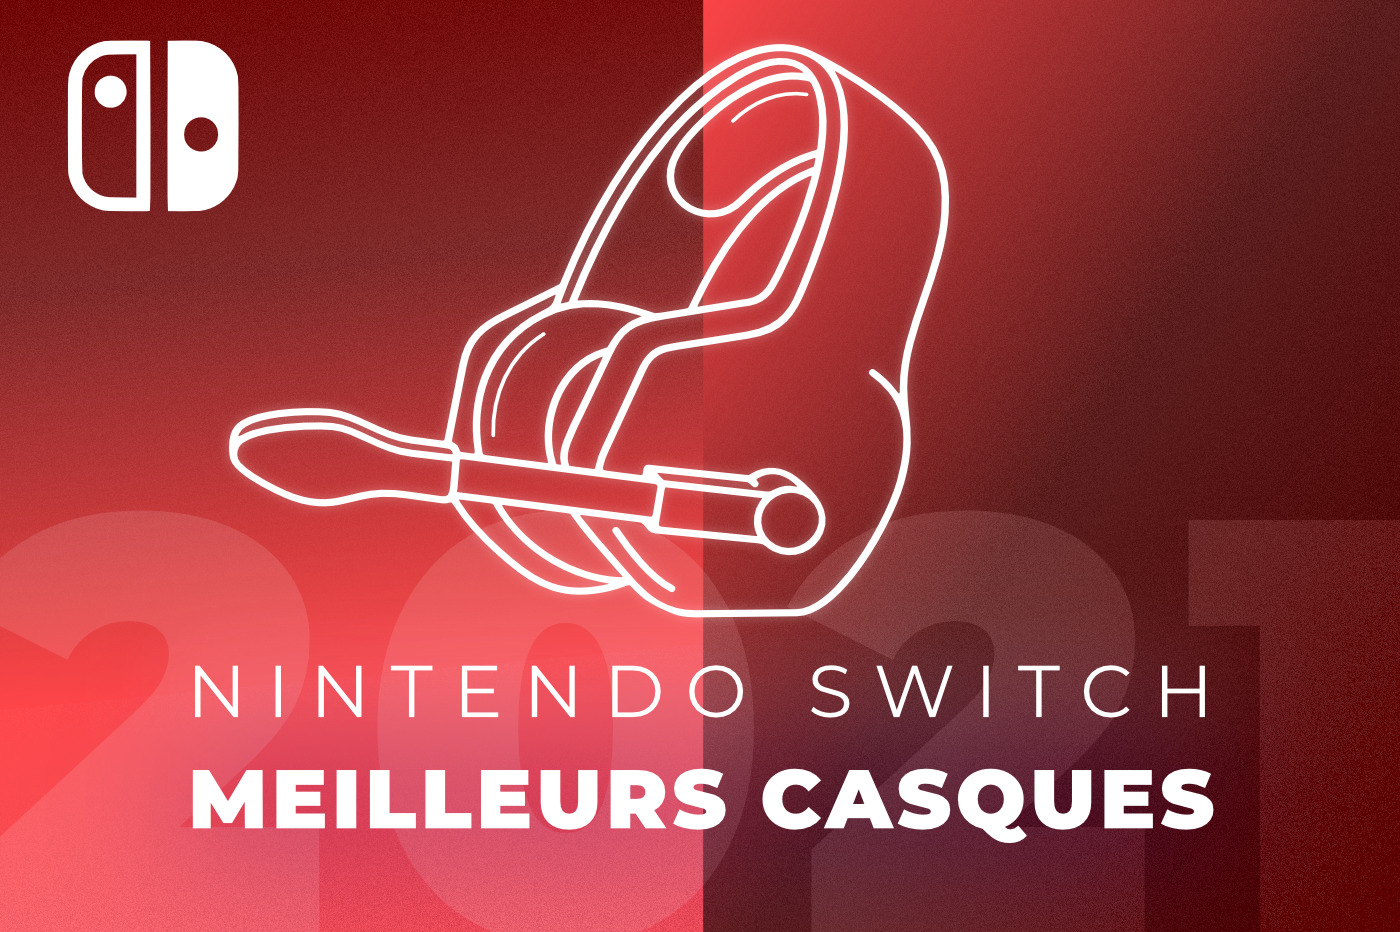 Golvery Casque de jeu sans fil pour Nintendo Switch, casque supra